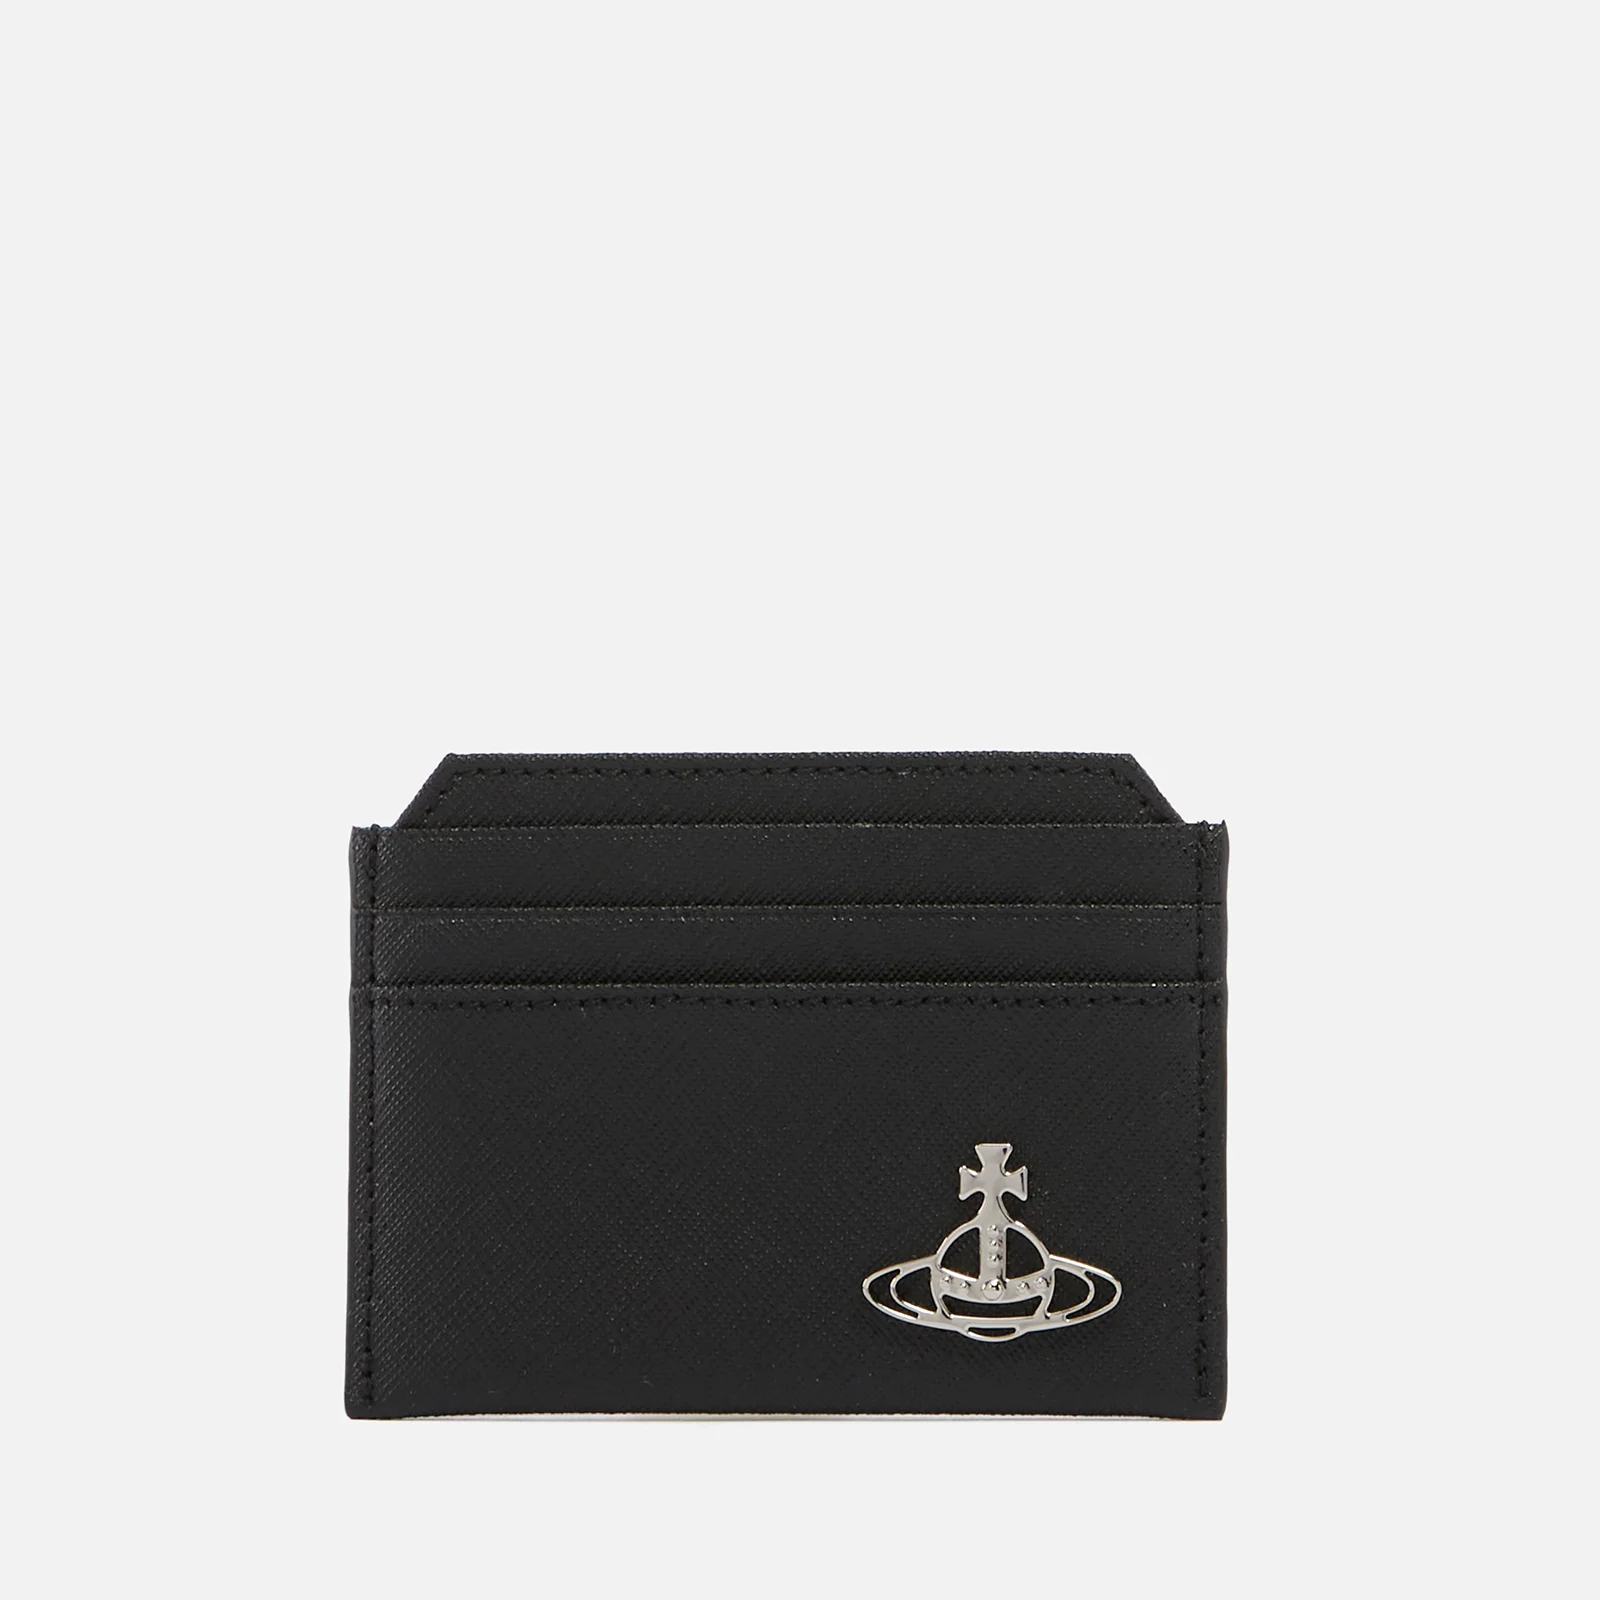 Vivienne Westwood Saffiano Leather Cardholder Image 1